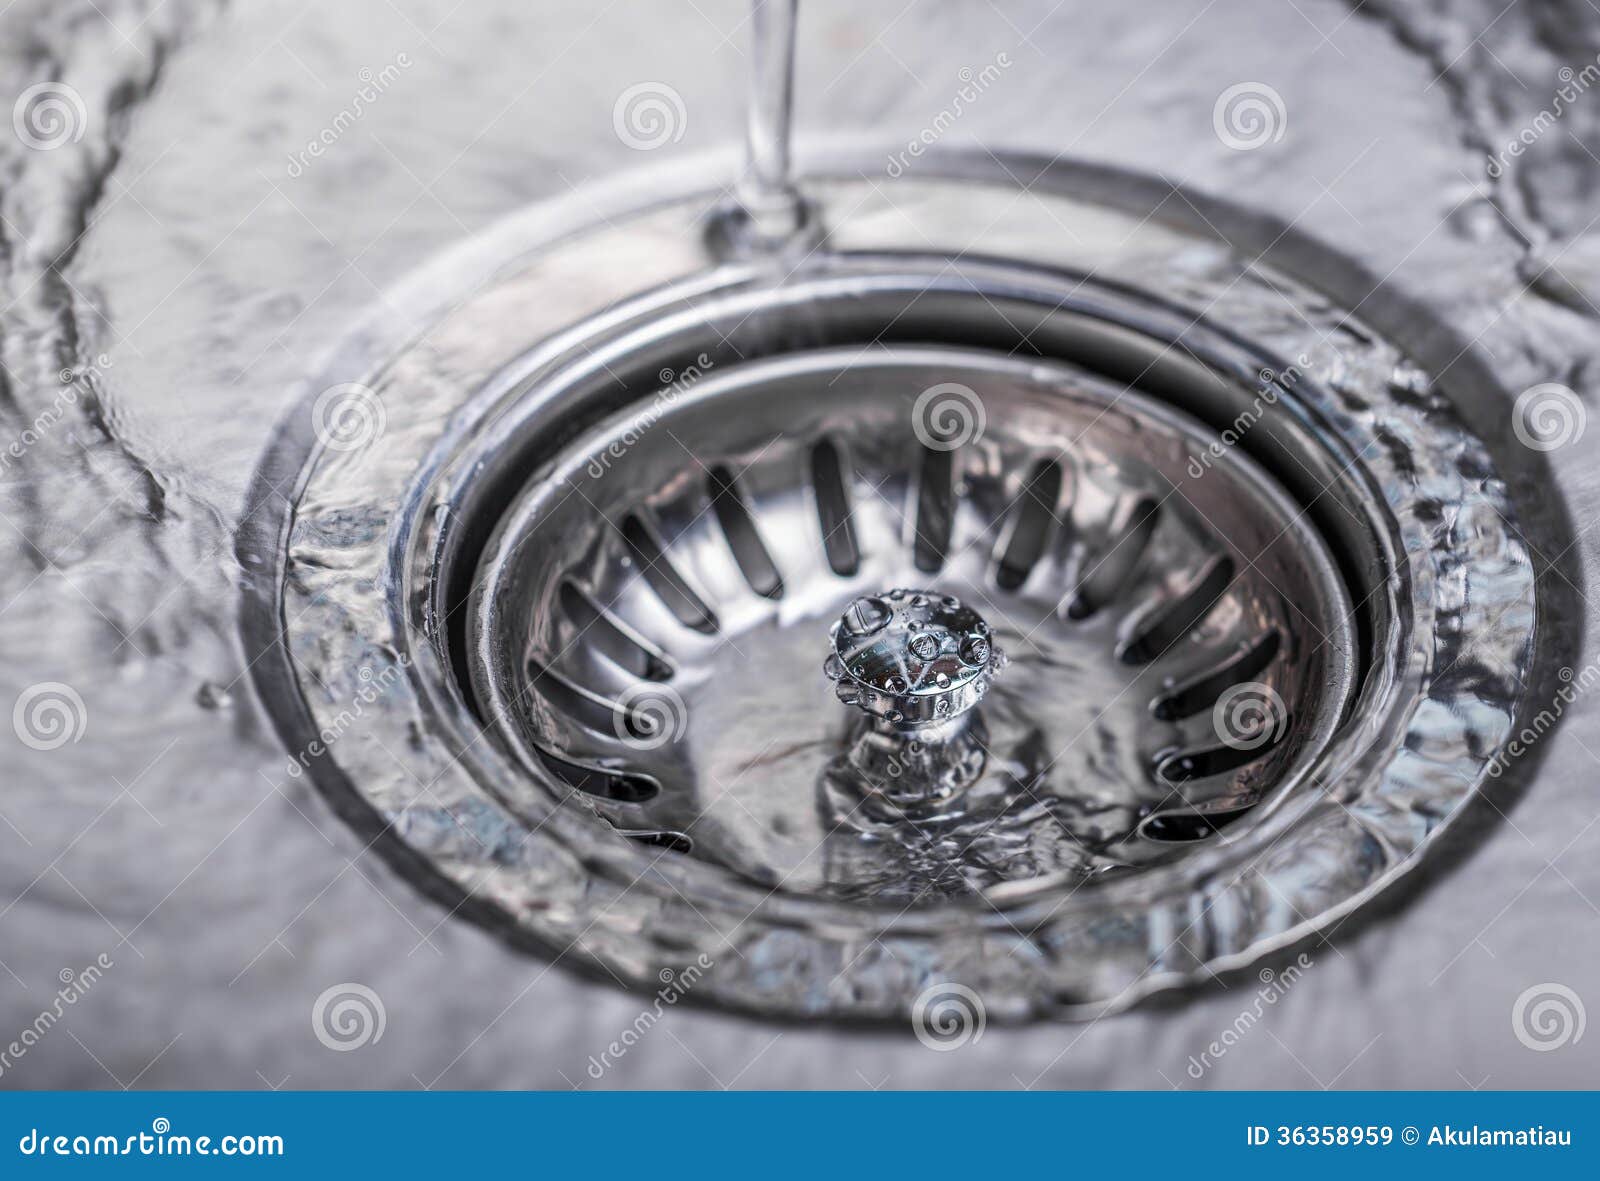 shutting cold water in kitchen sink